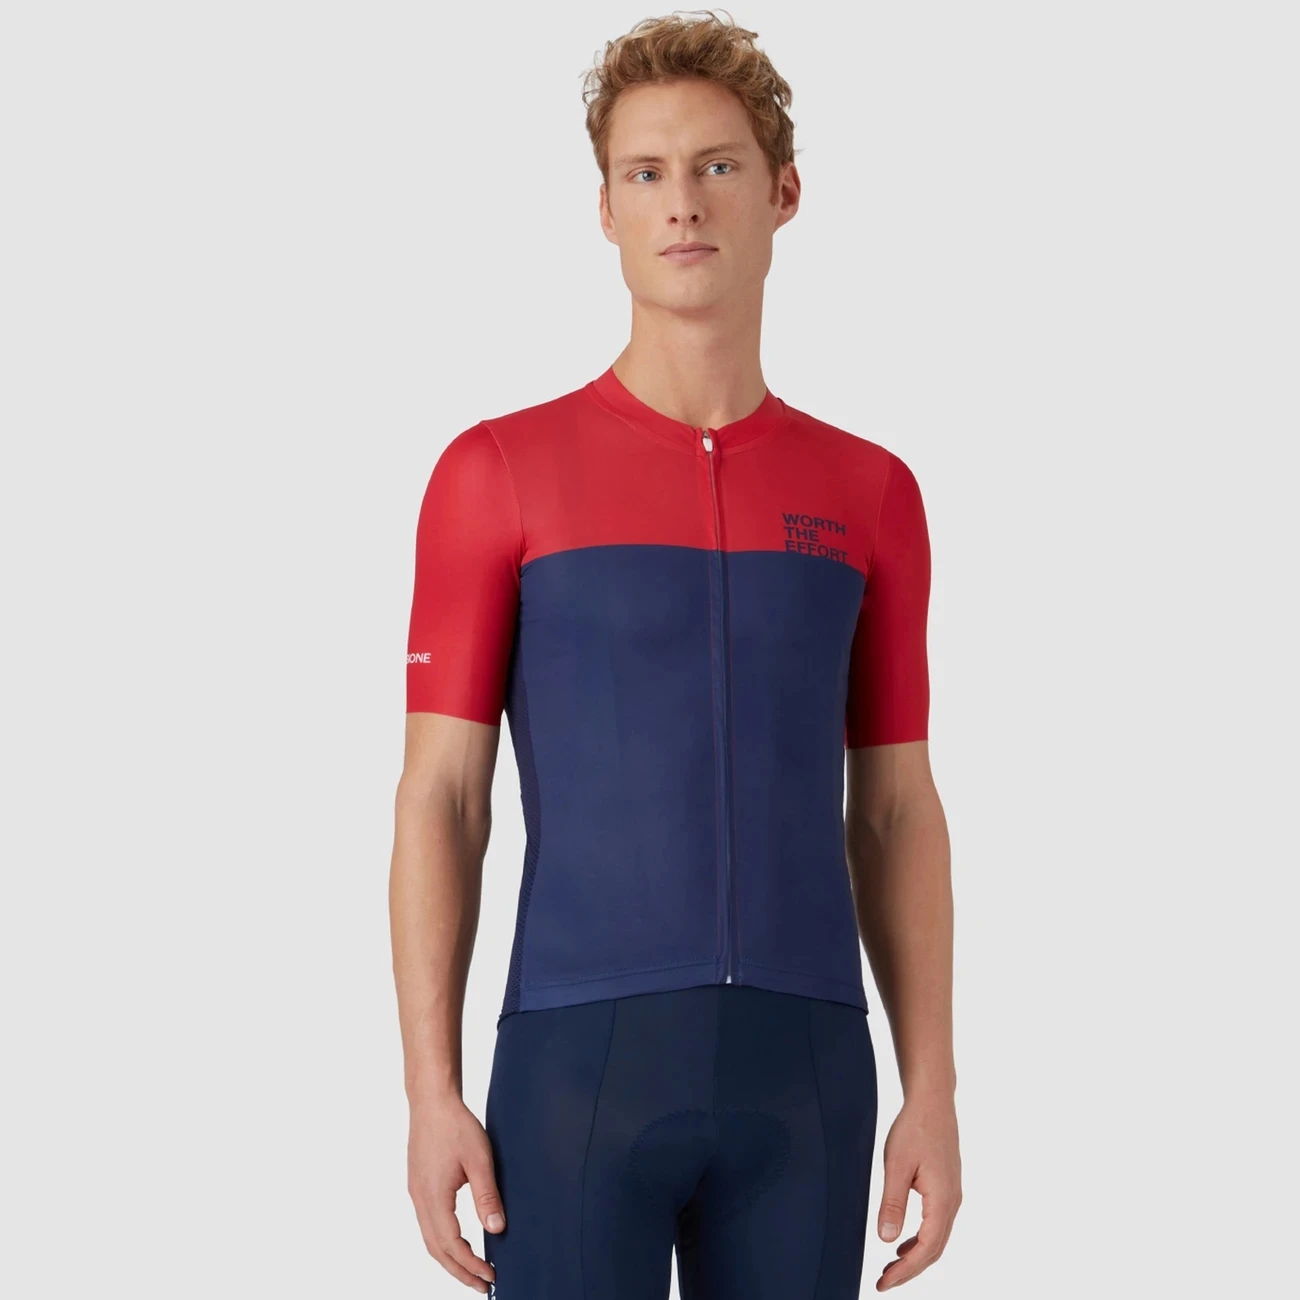 La Passione camisetas de Ciclismo para hombre, Maillot de manga corta, color azul/rojo, ropa equipo profesional|Maillot de ciclismo| AliExpress